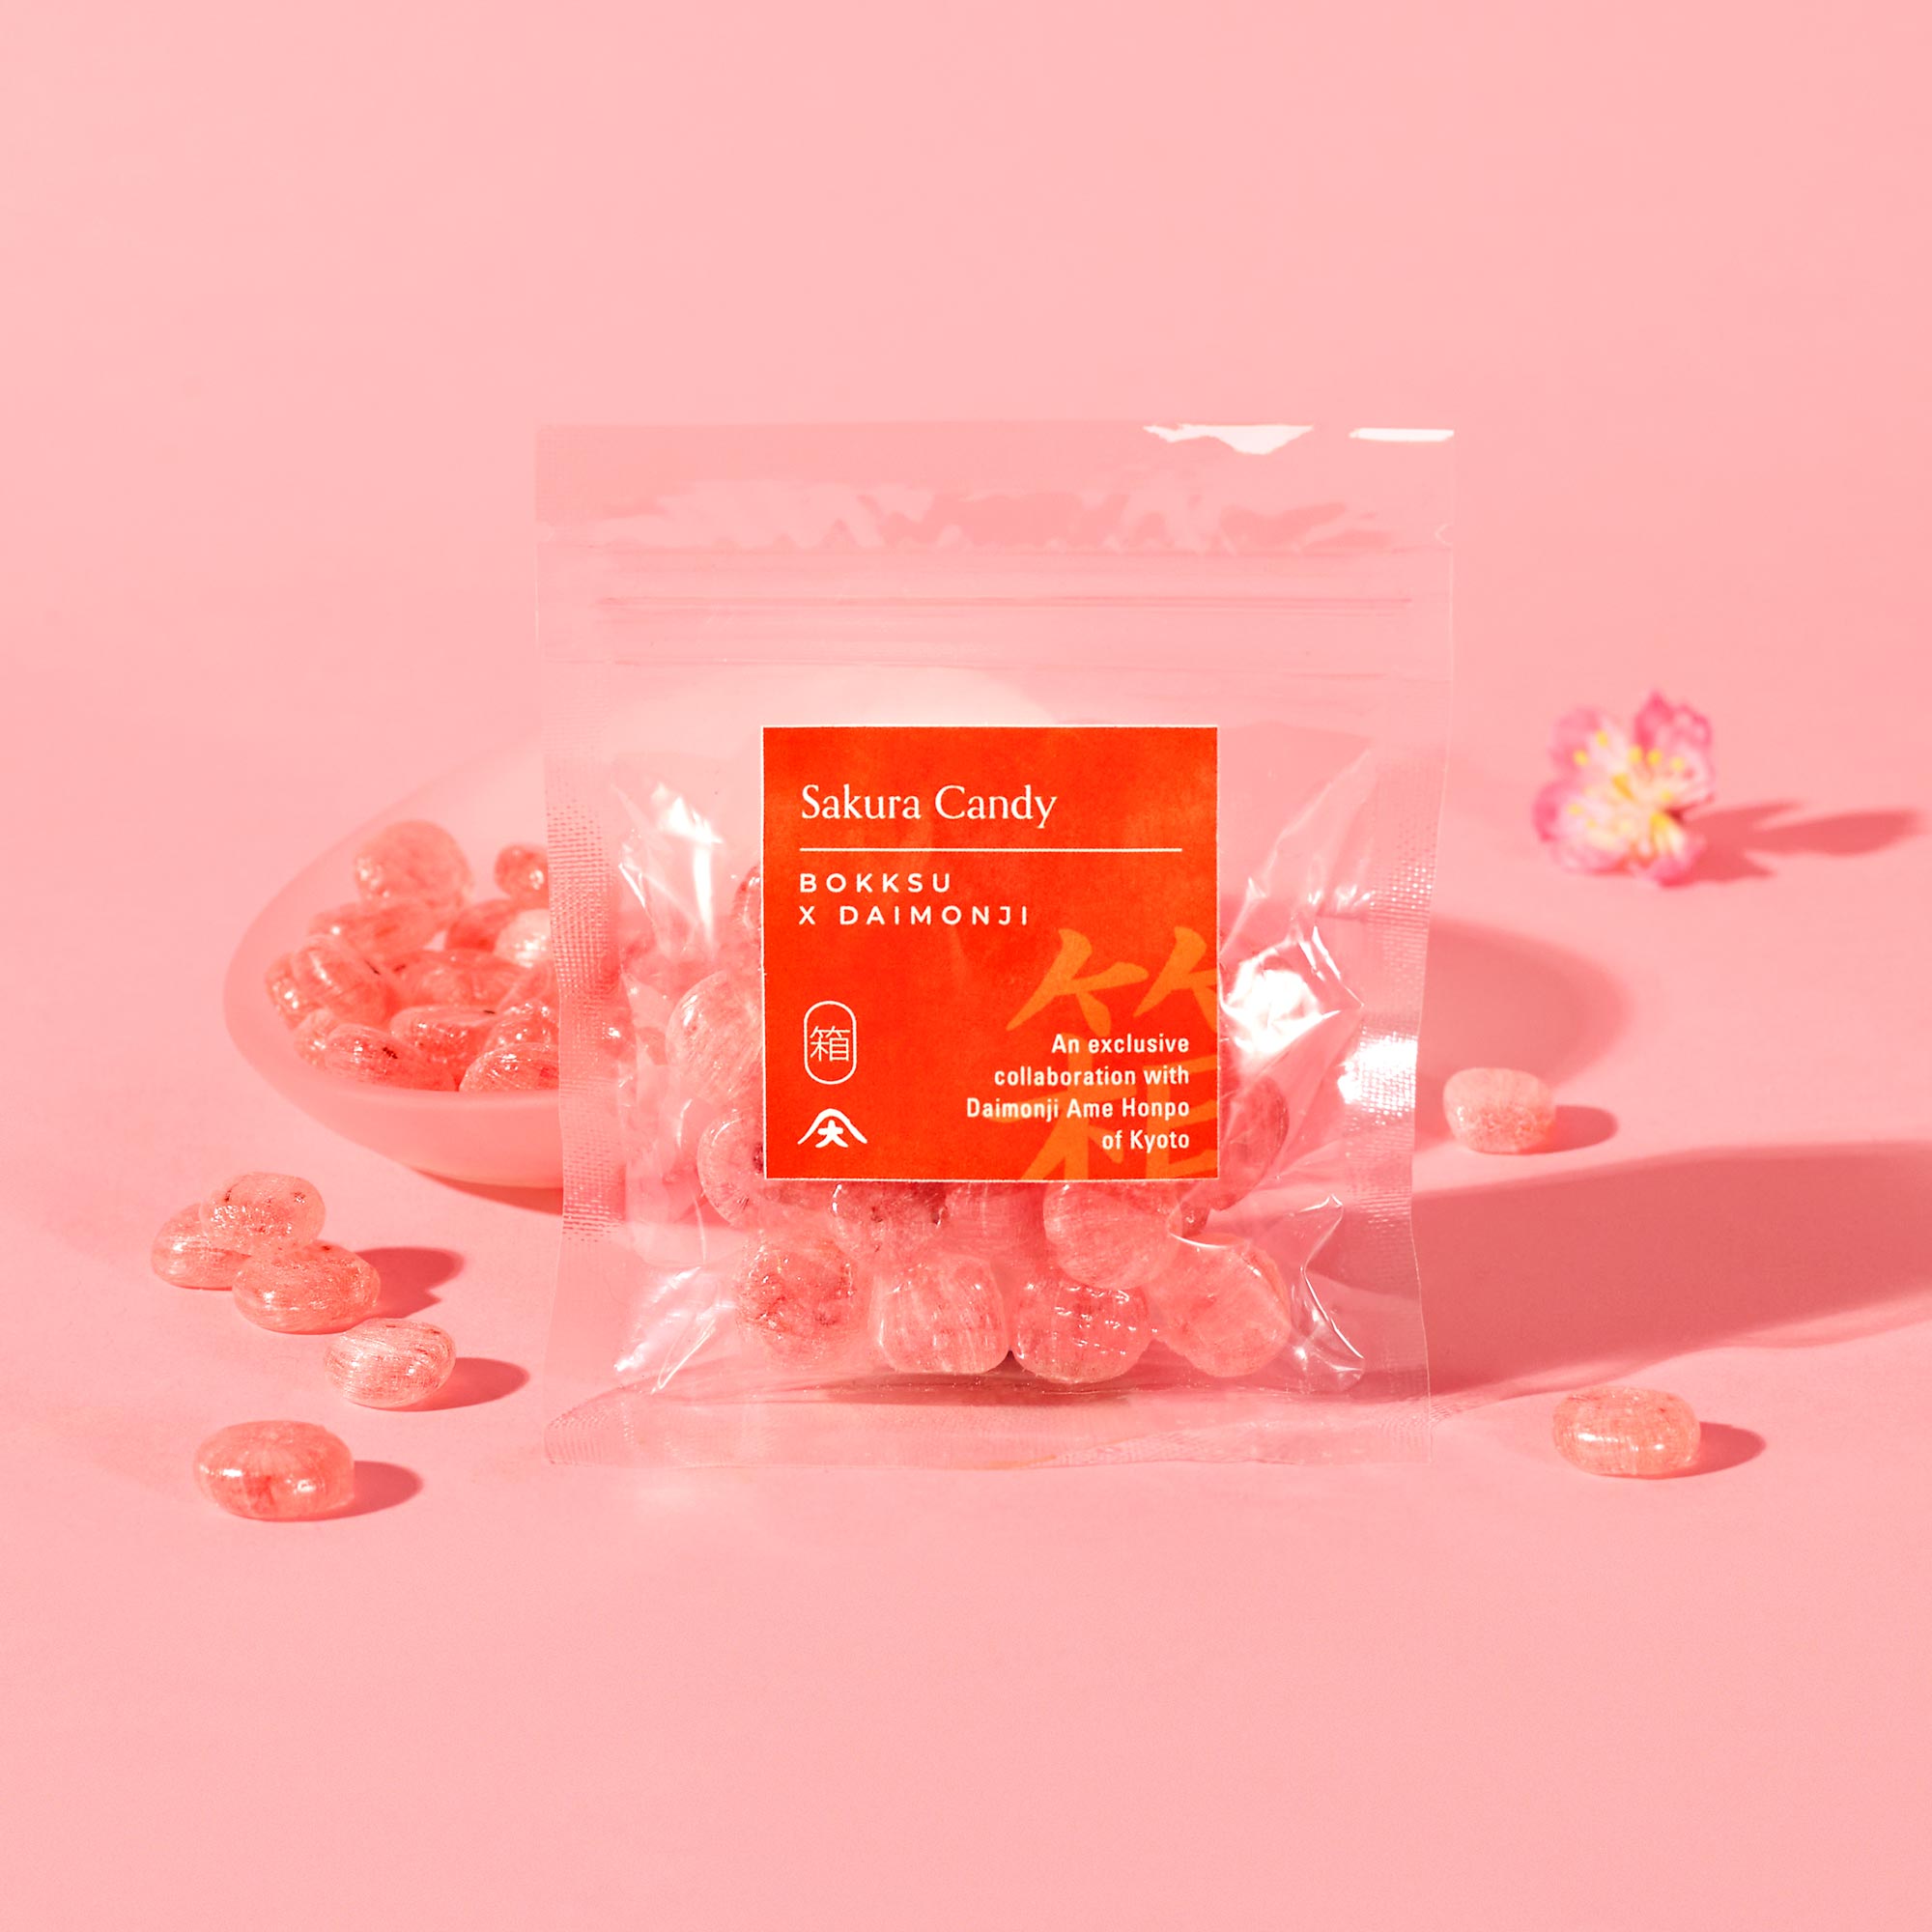 Artisanal Japanese Candy - Handmade Sakura Candy | Bokksu